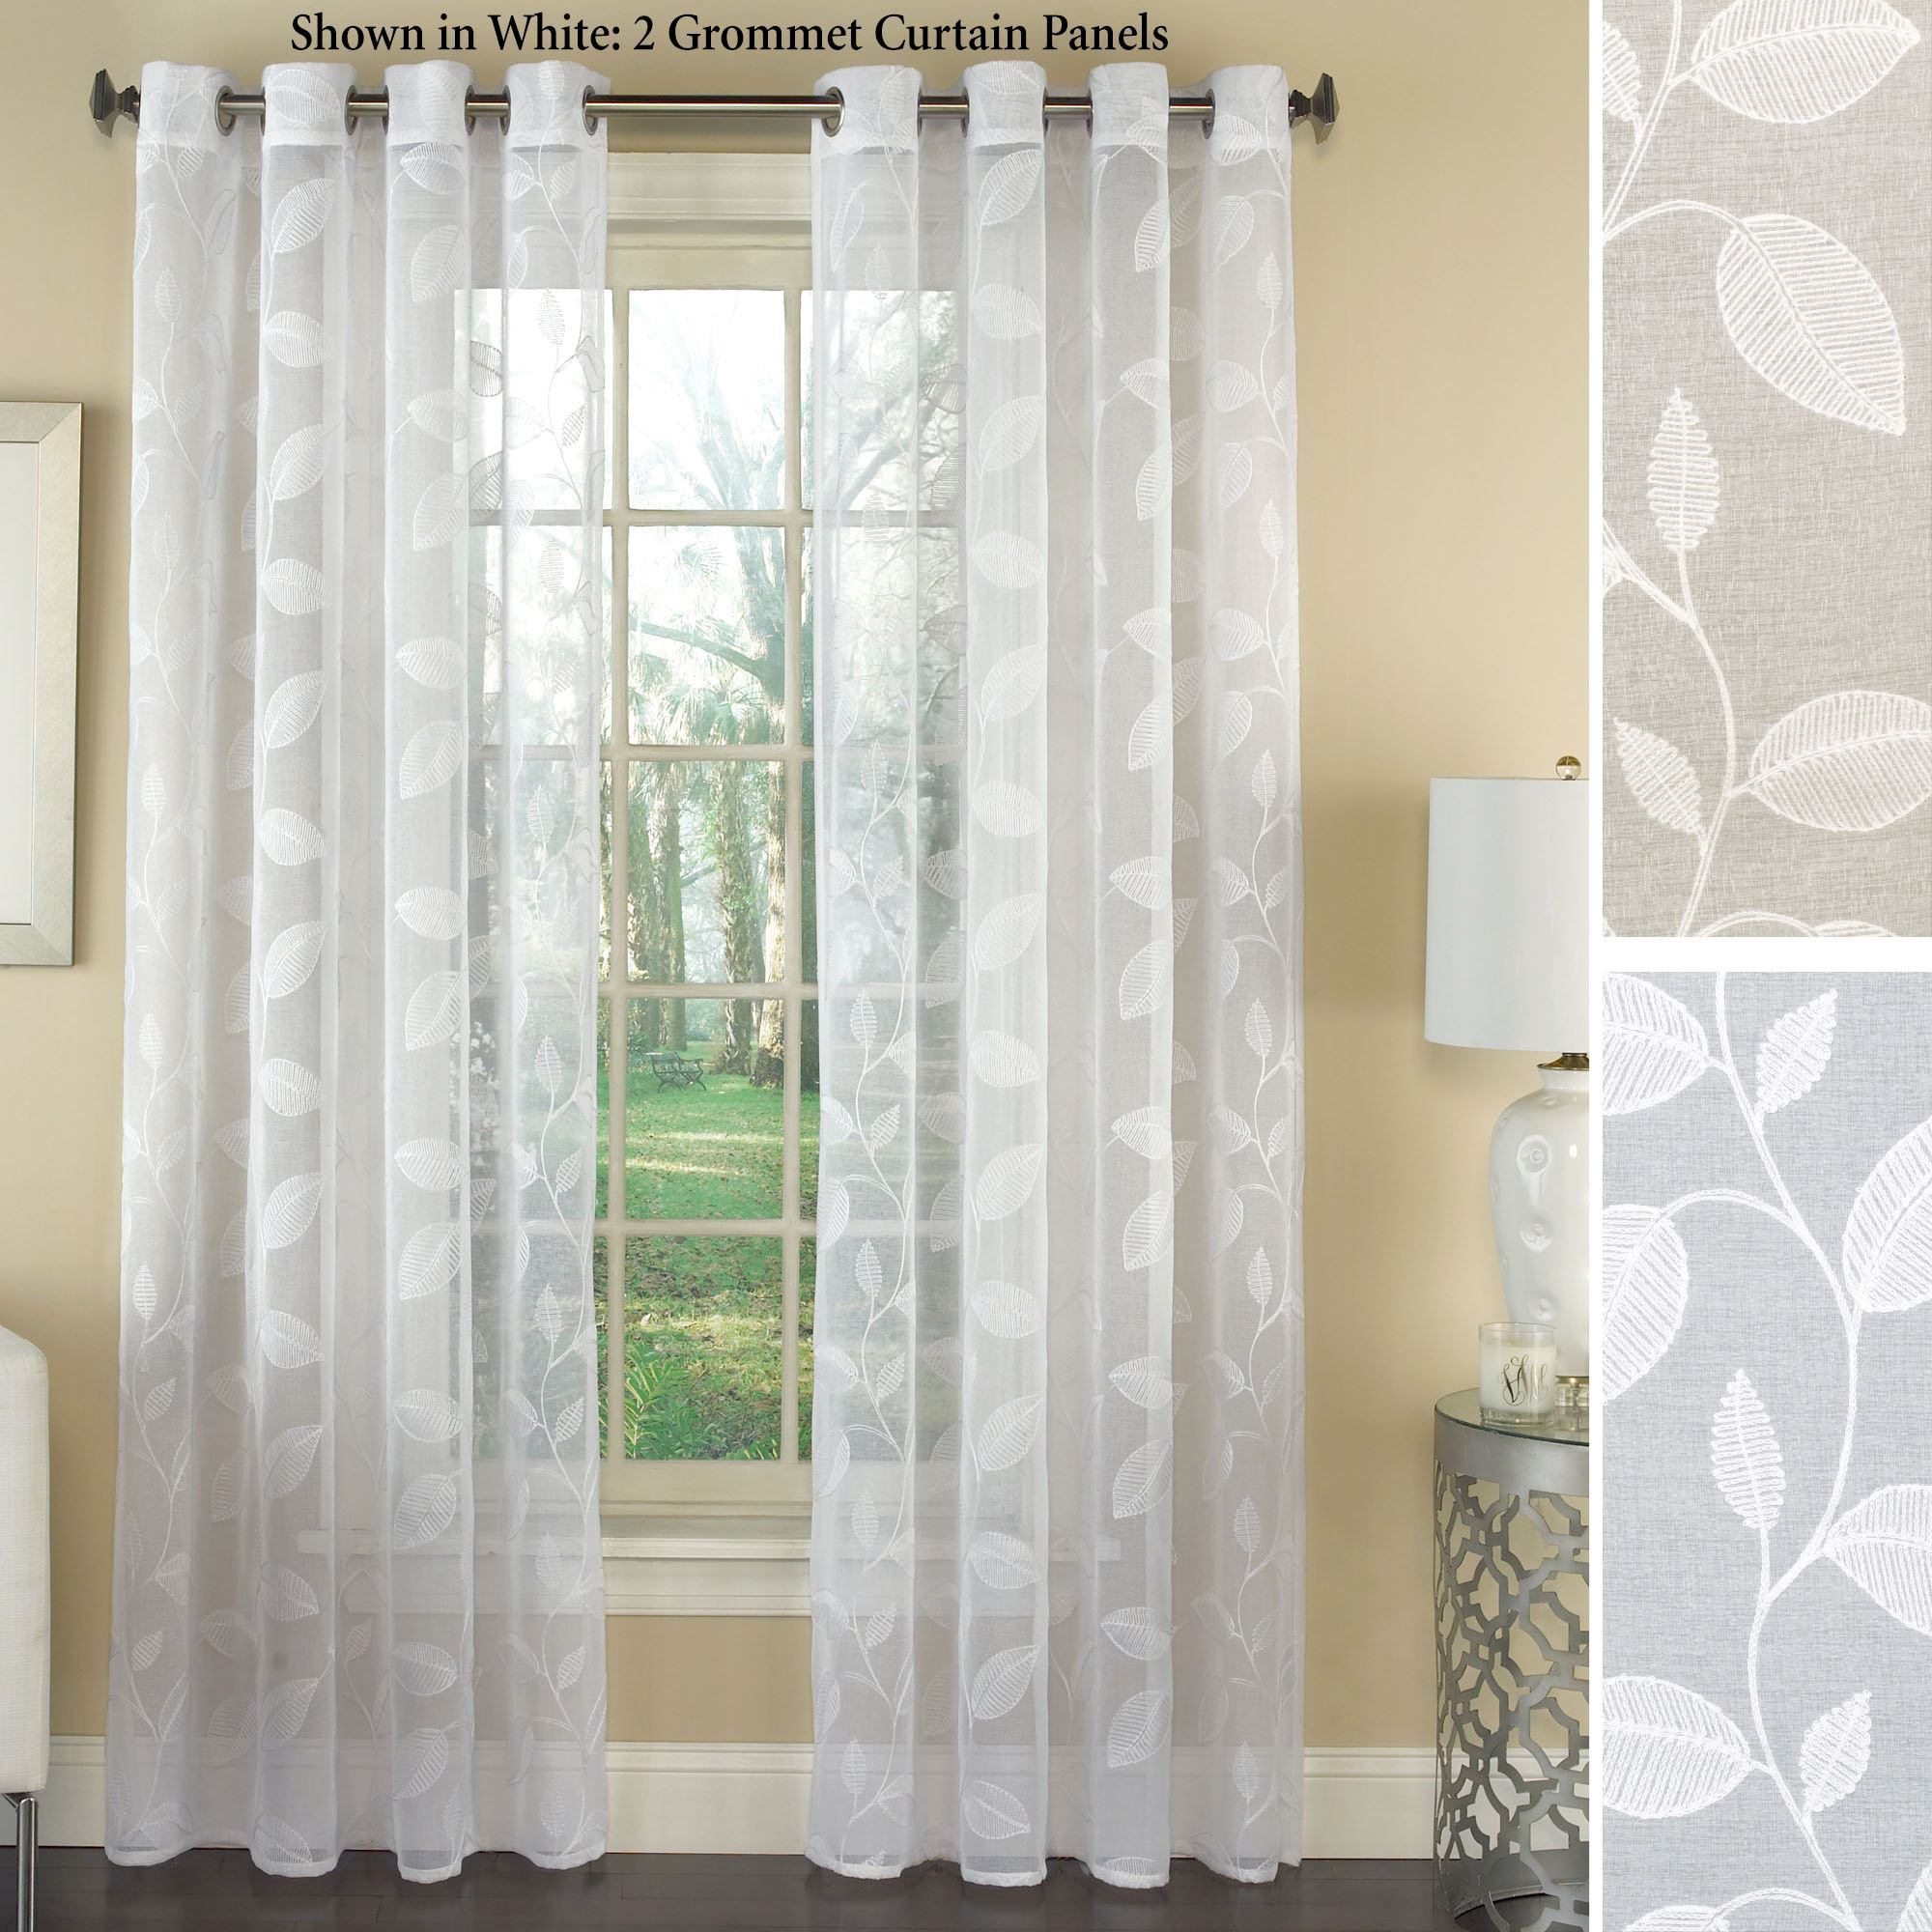 curtain panels avery grommet curtain panel. click to expand QPBIVYL